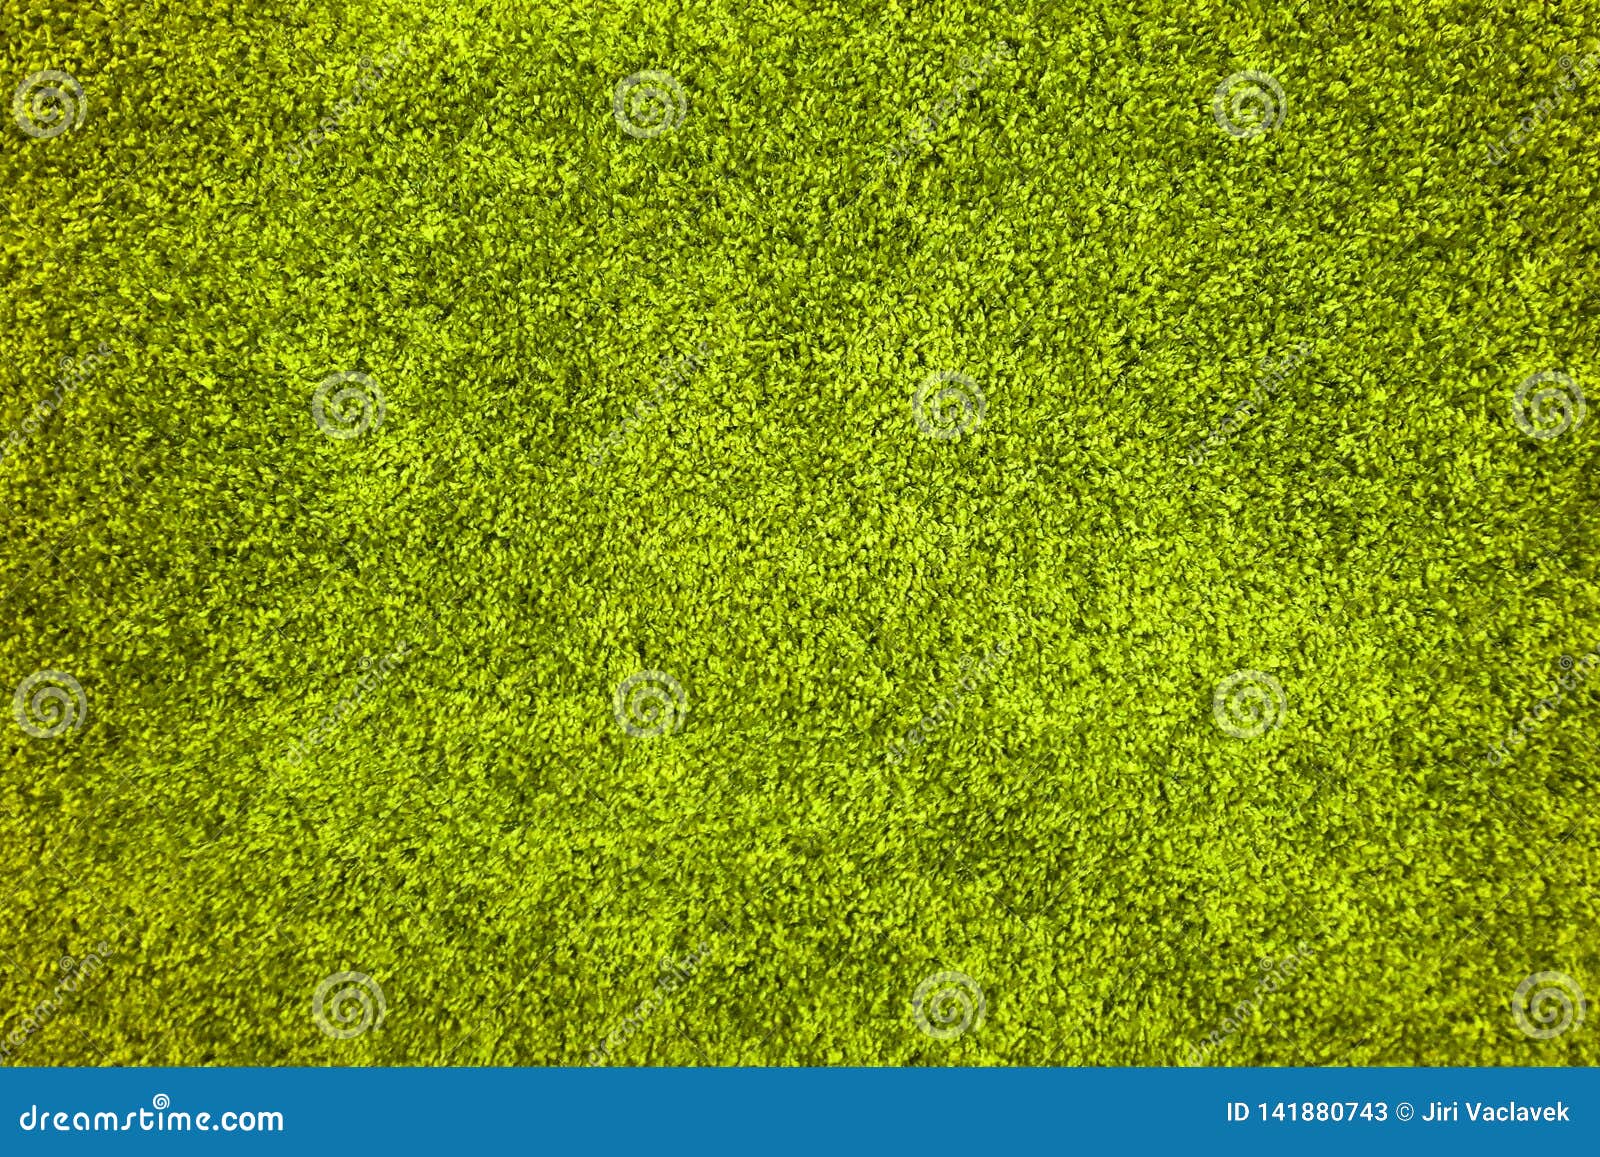 Plastic Green Grass Carpet Texture Stock Image - Image of floor